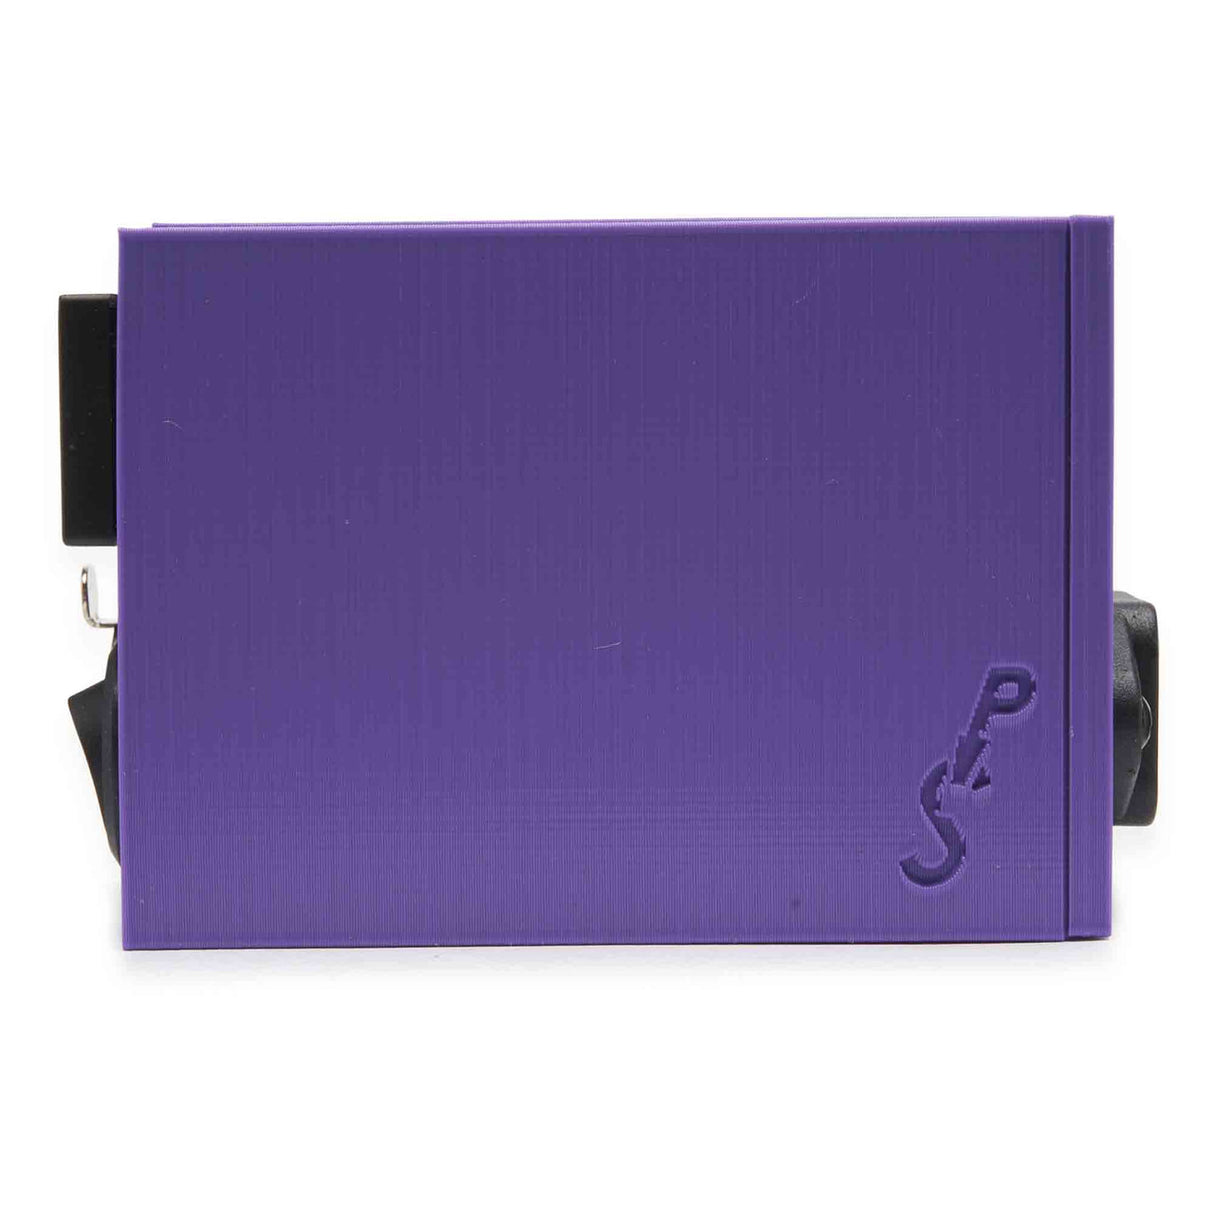 Pelinail W/ PSci Banger Purple